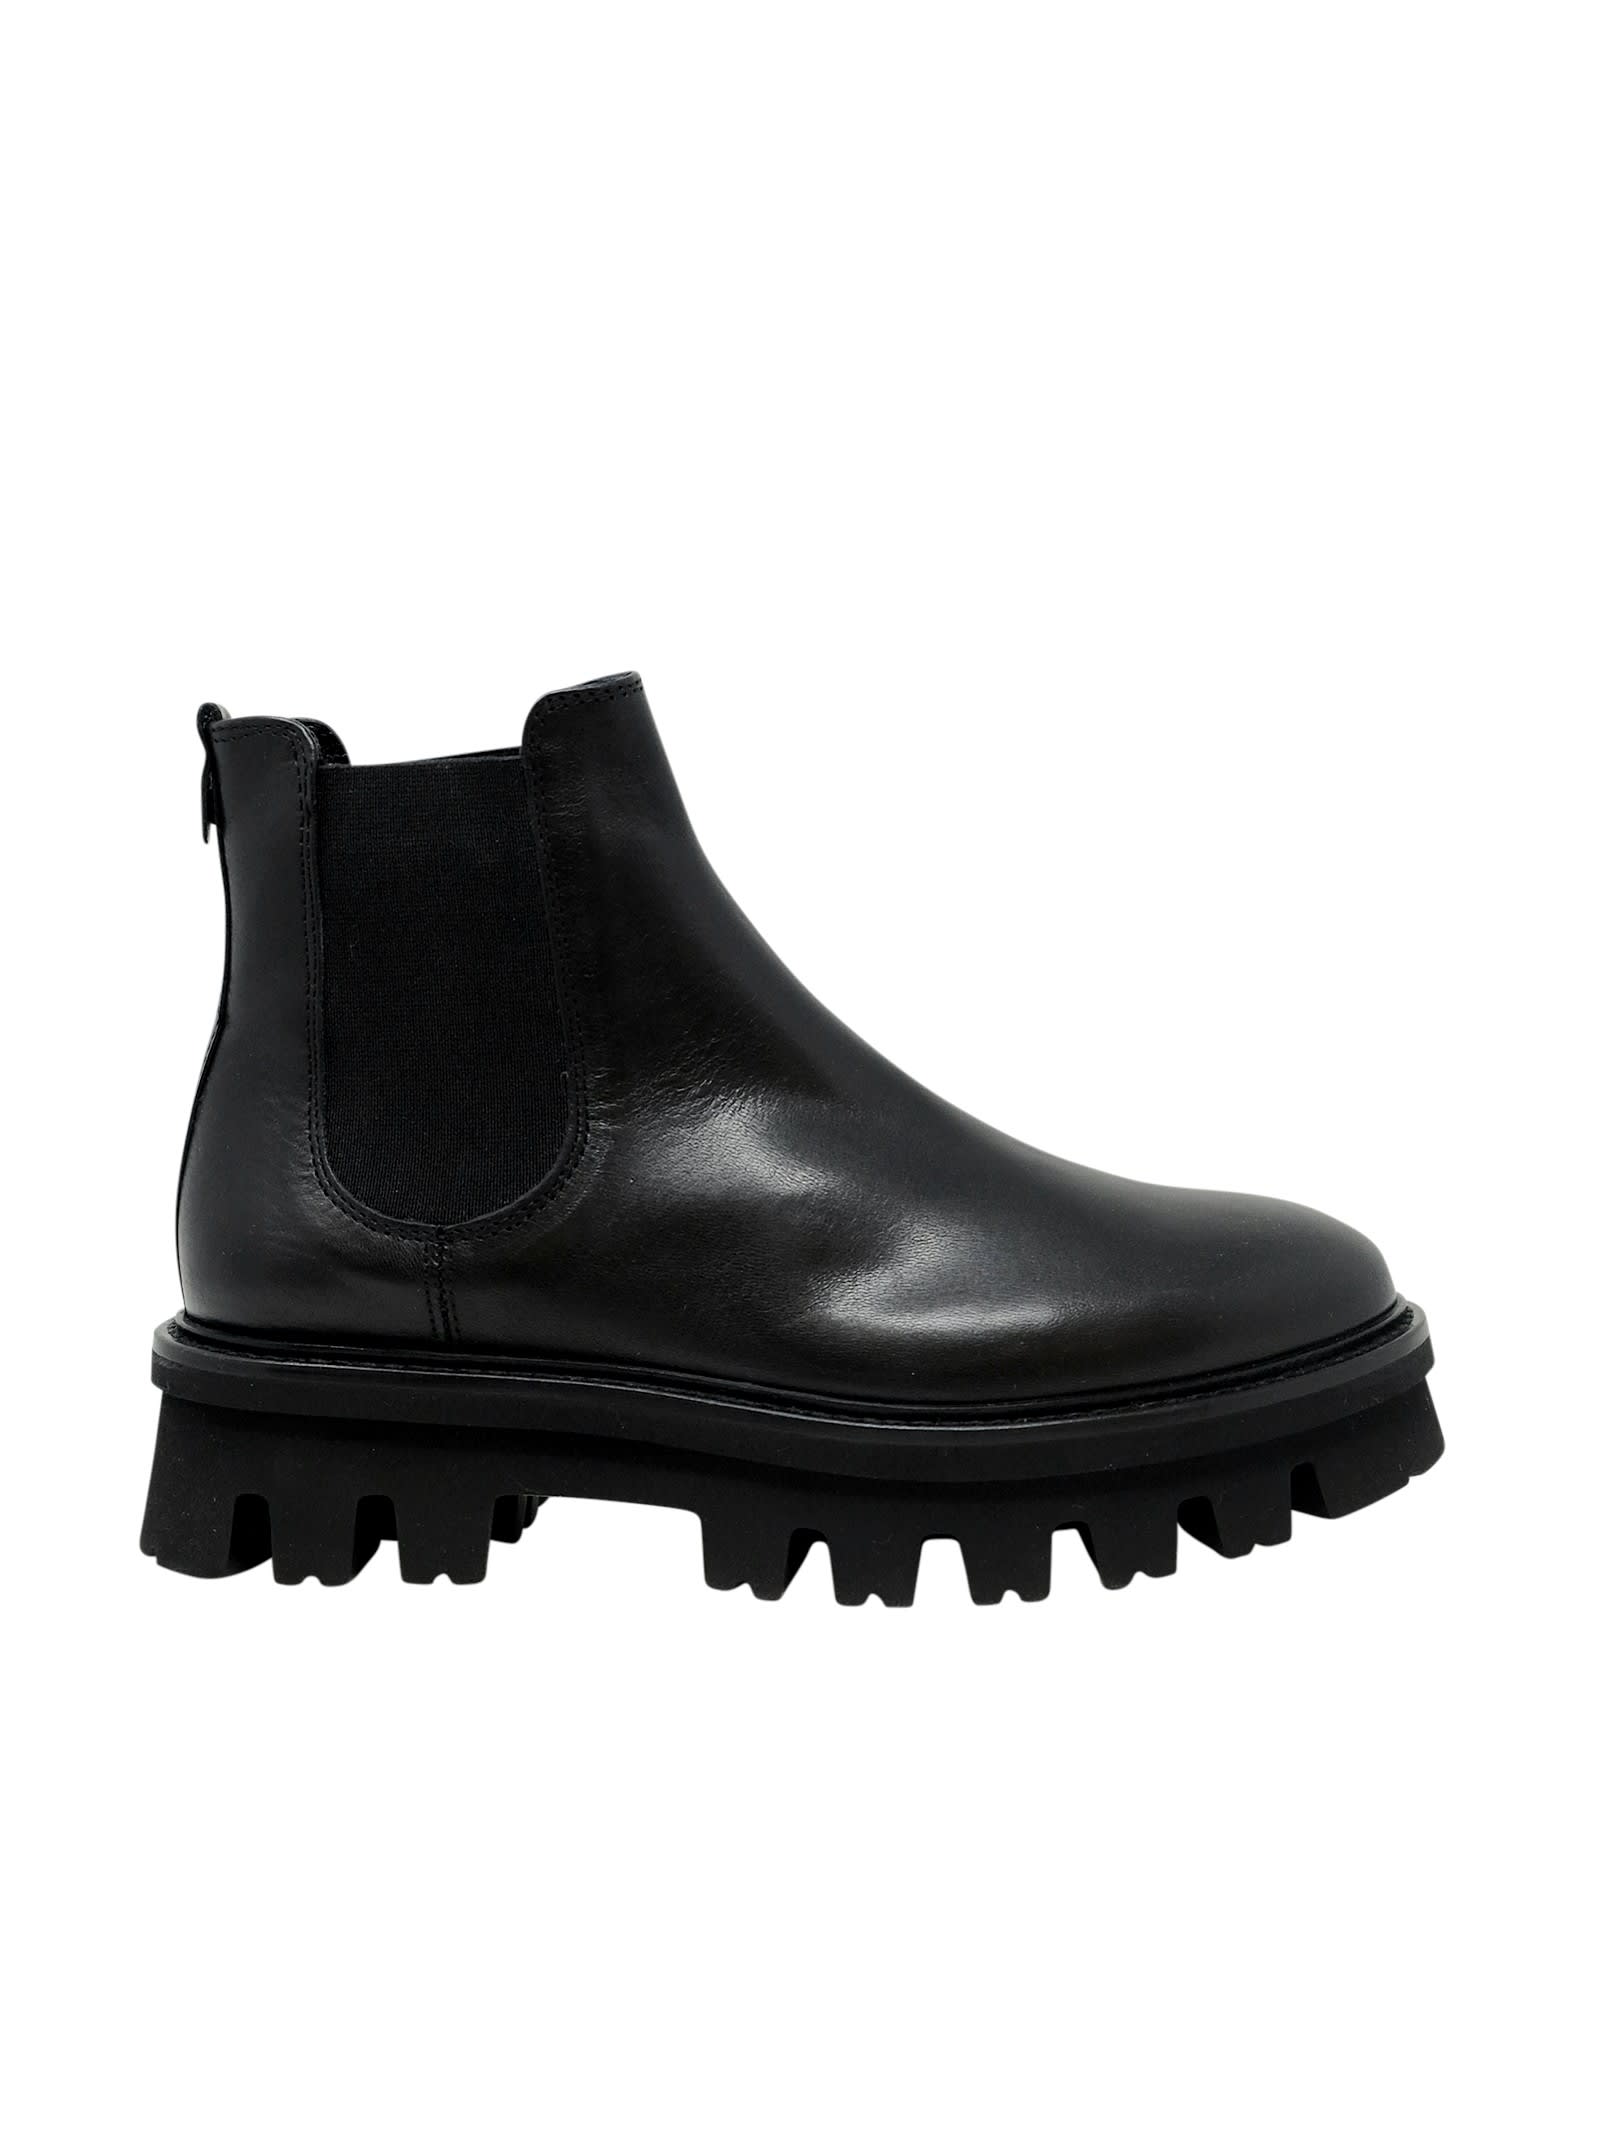 AGL ridged sole platform boots - Black